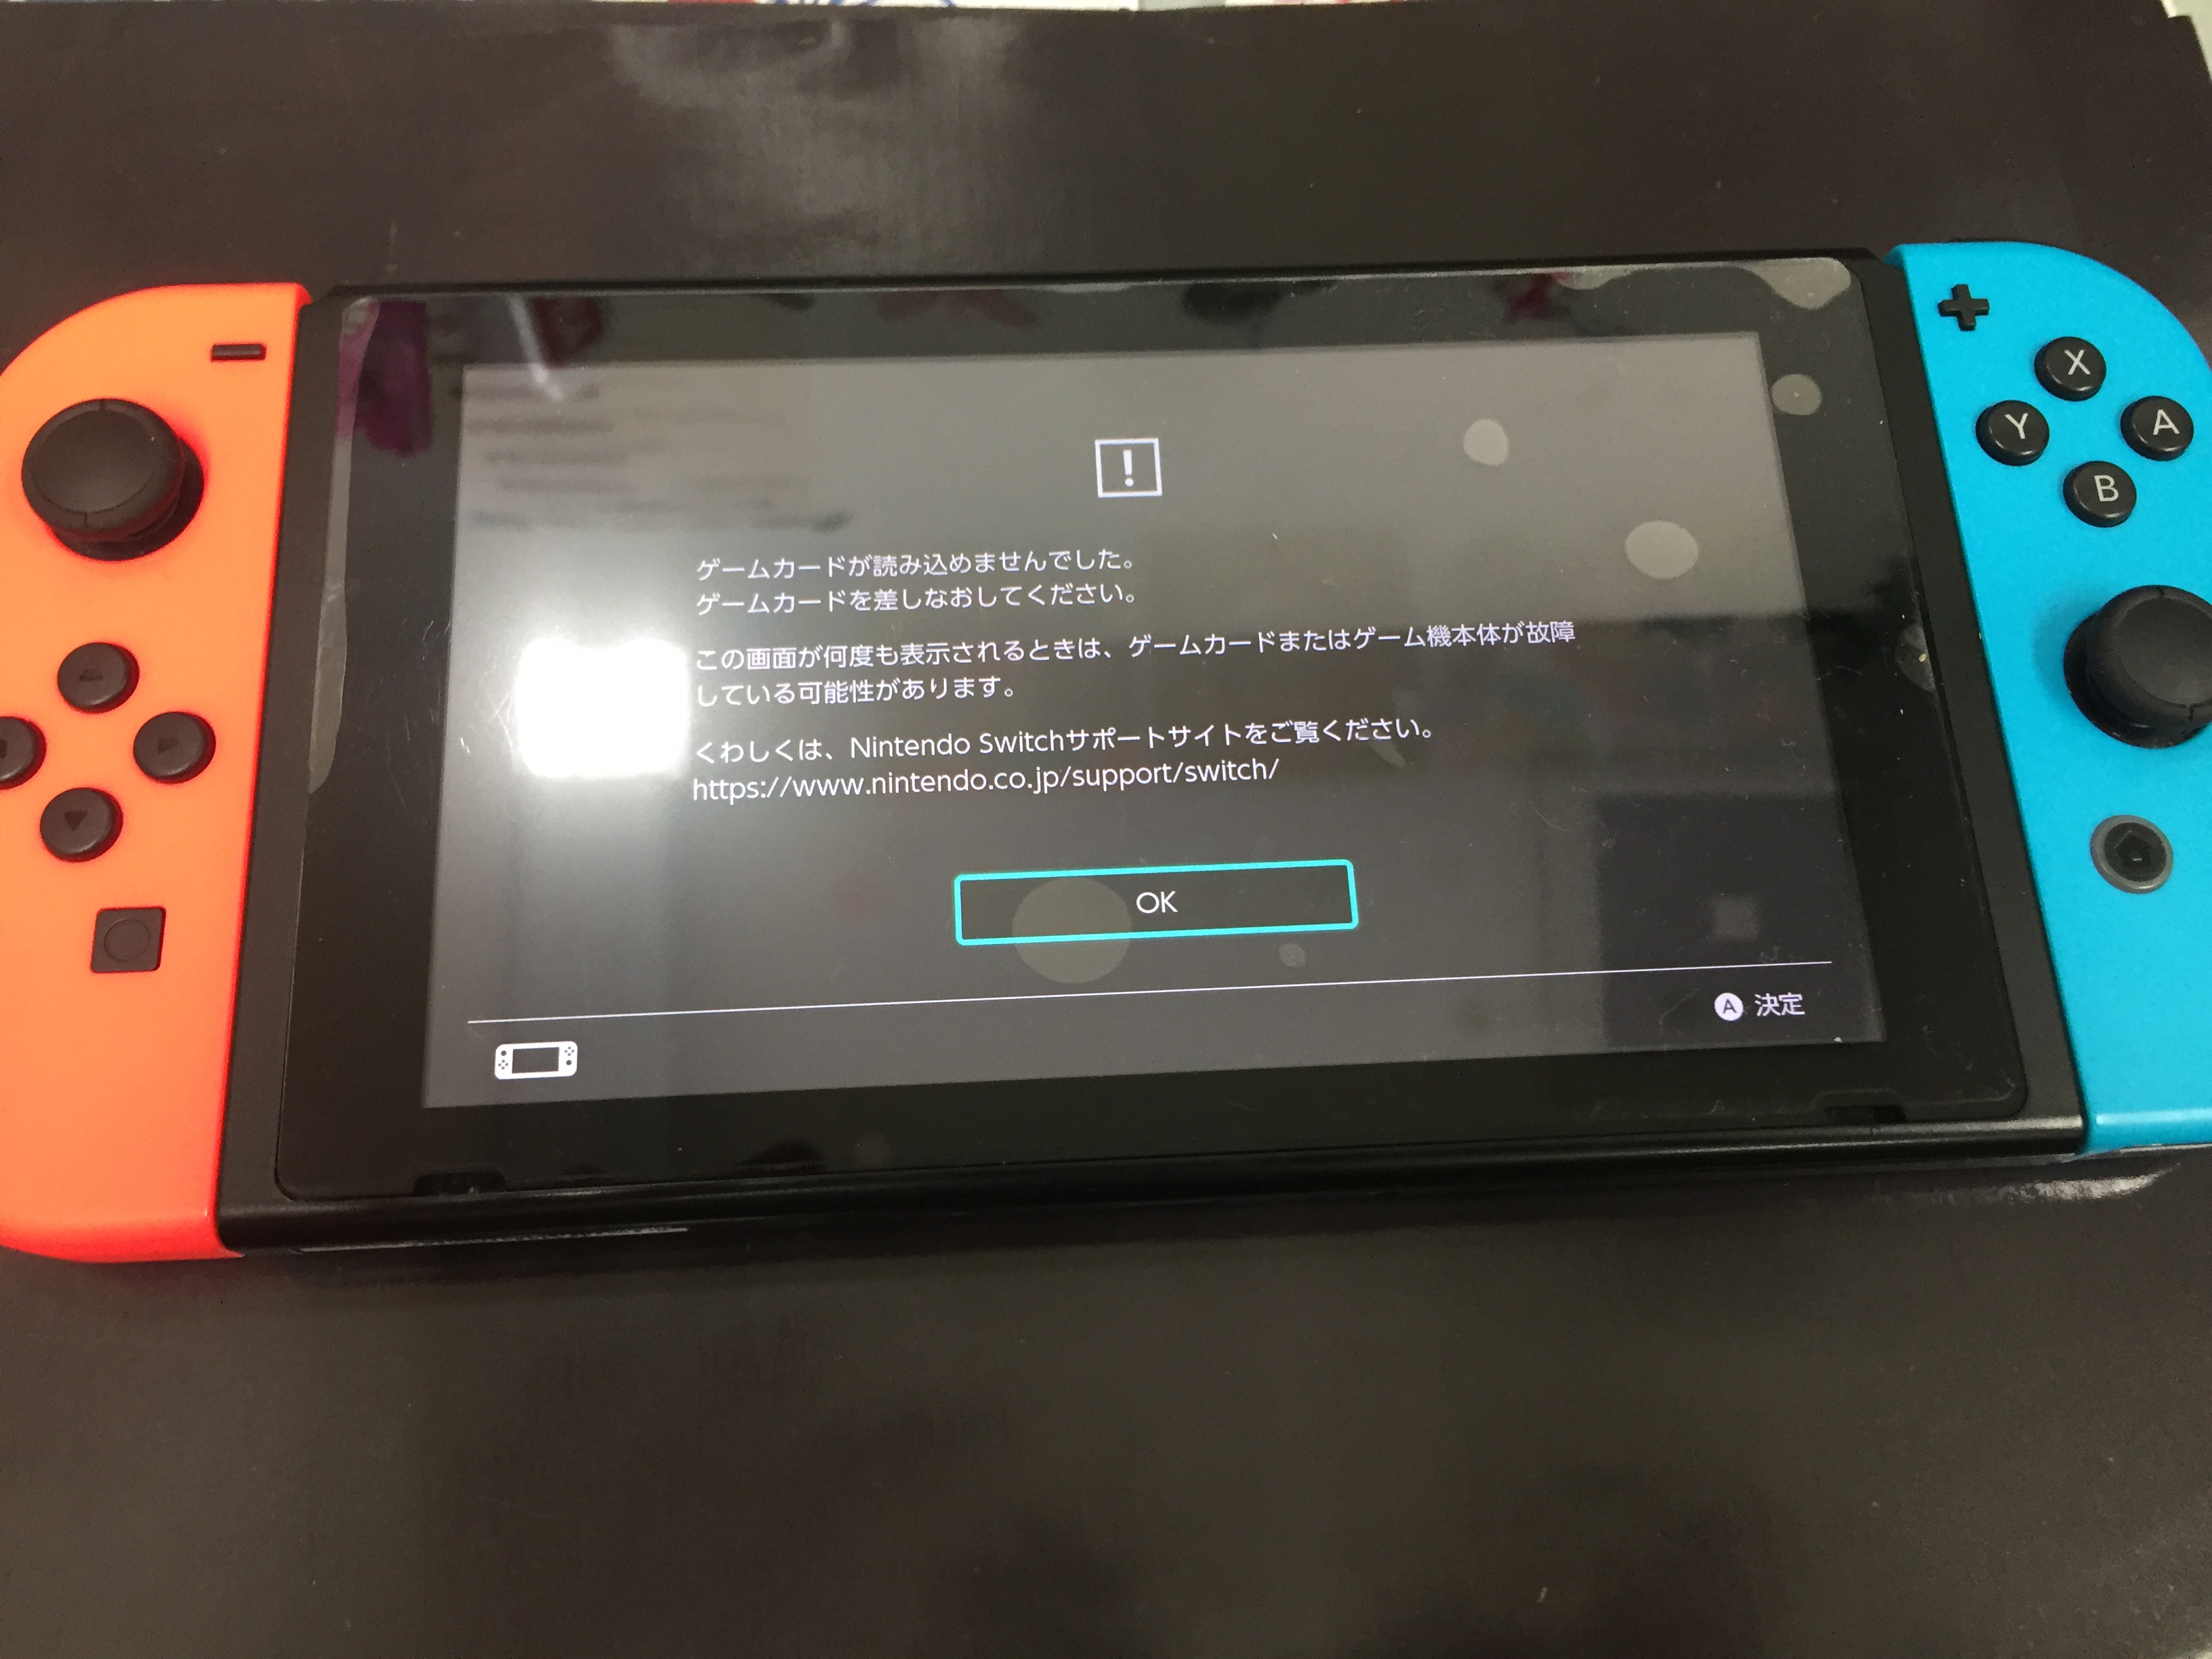 Switchのカセットが読み込めない 実は ただの 汚れ Nintendo3ds Switch Psp 修理のゲームホスピタル Nintendo3ds ニンテンドーds Psp 修理